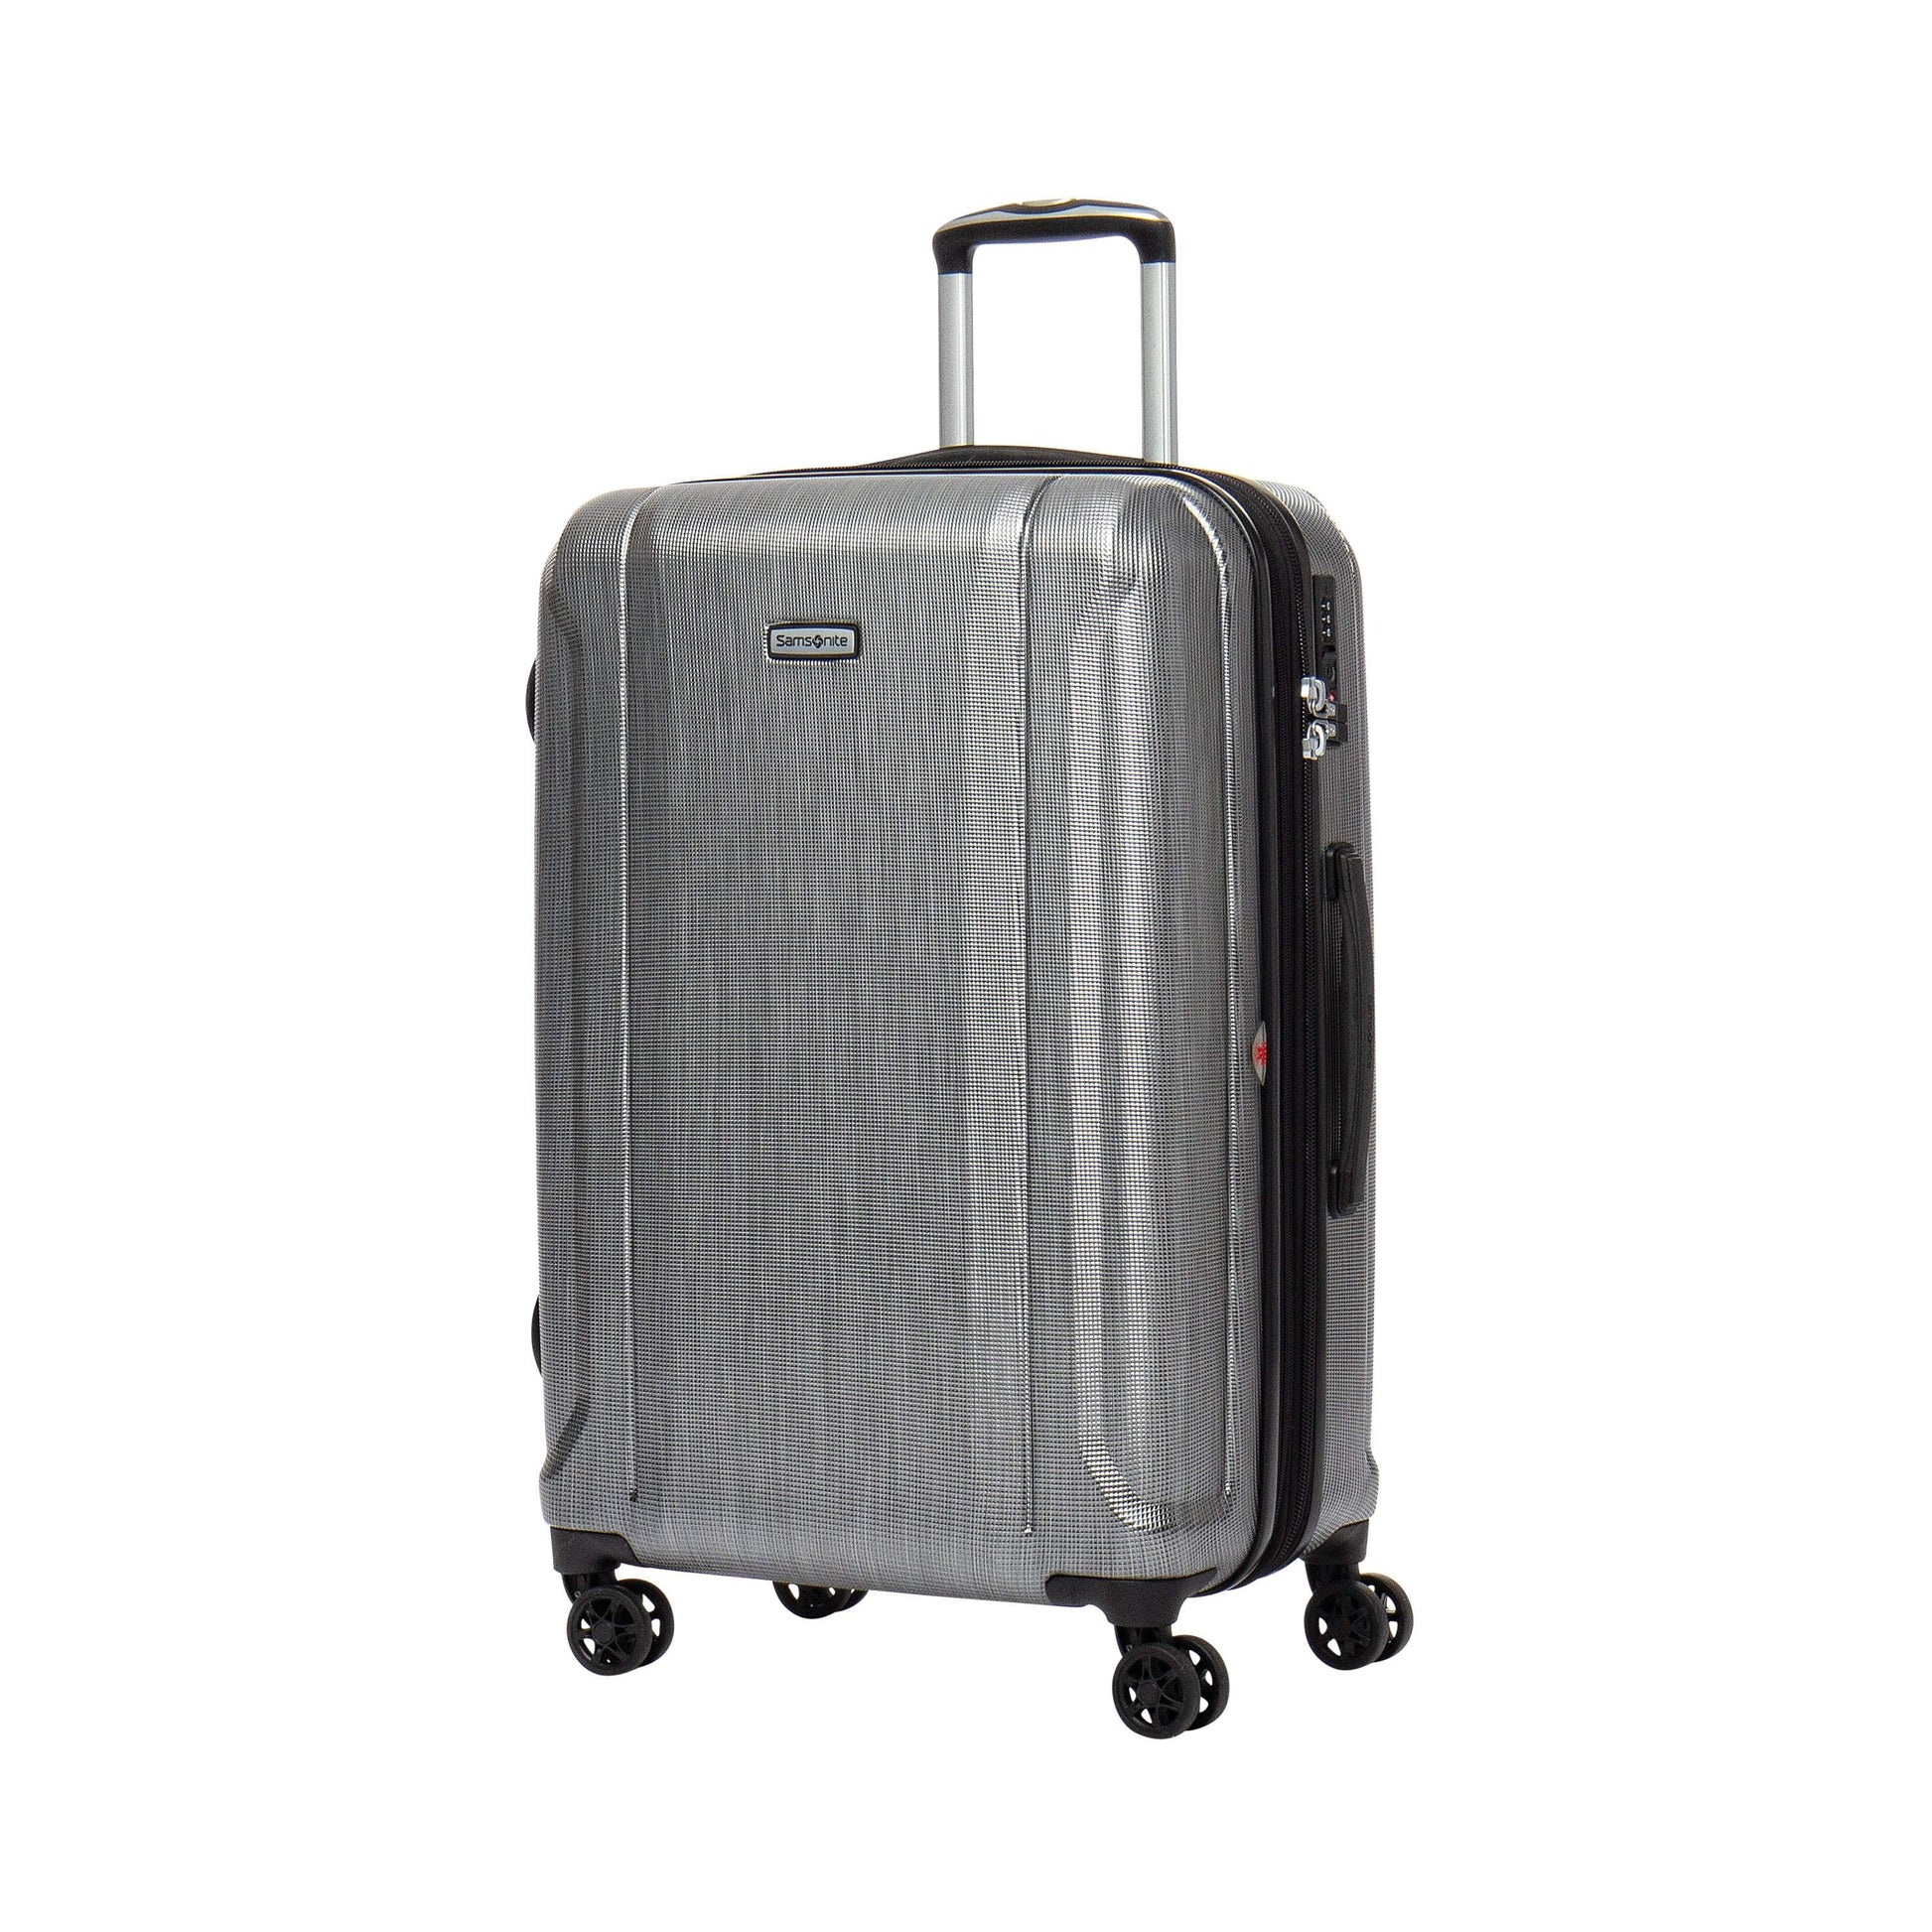 Samsonite Omni 3.0 - 2 Piece Spinner Expandable Luggage Set (Carry-On & Medium) - Brushed Silver